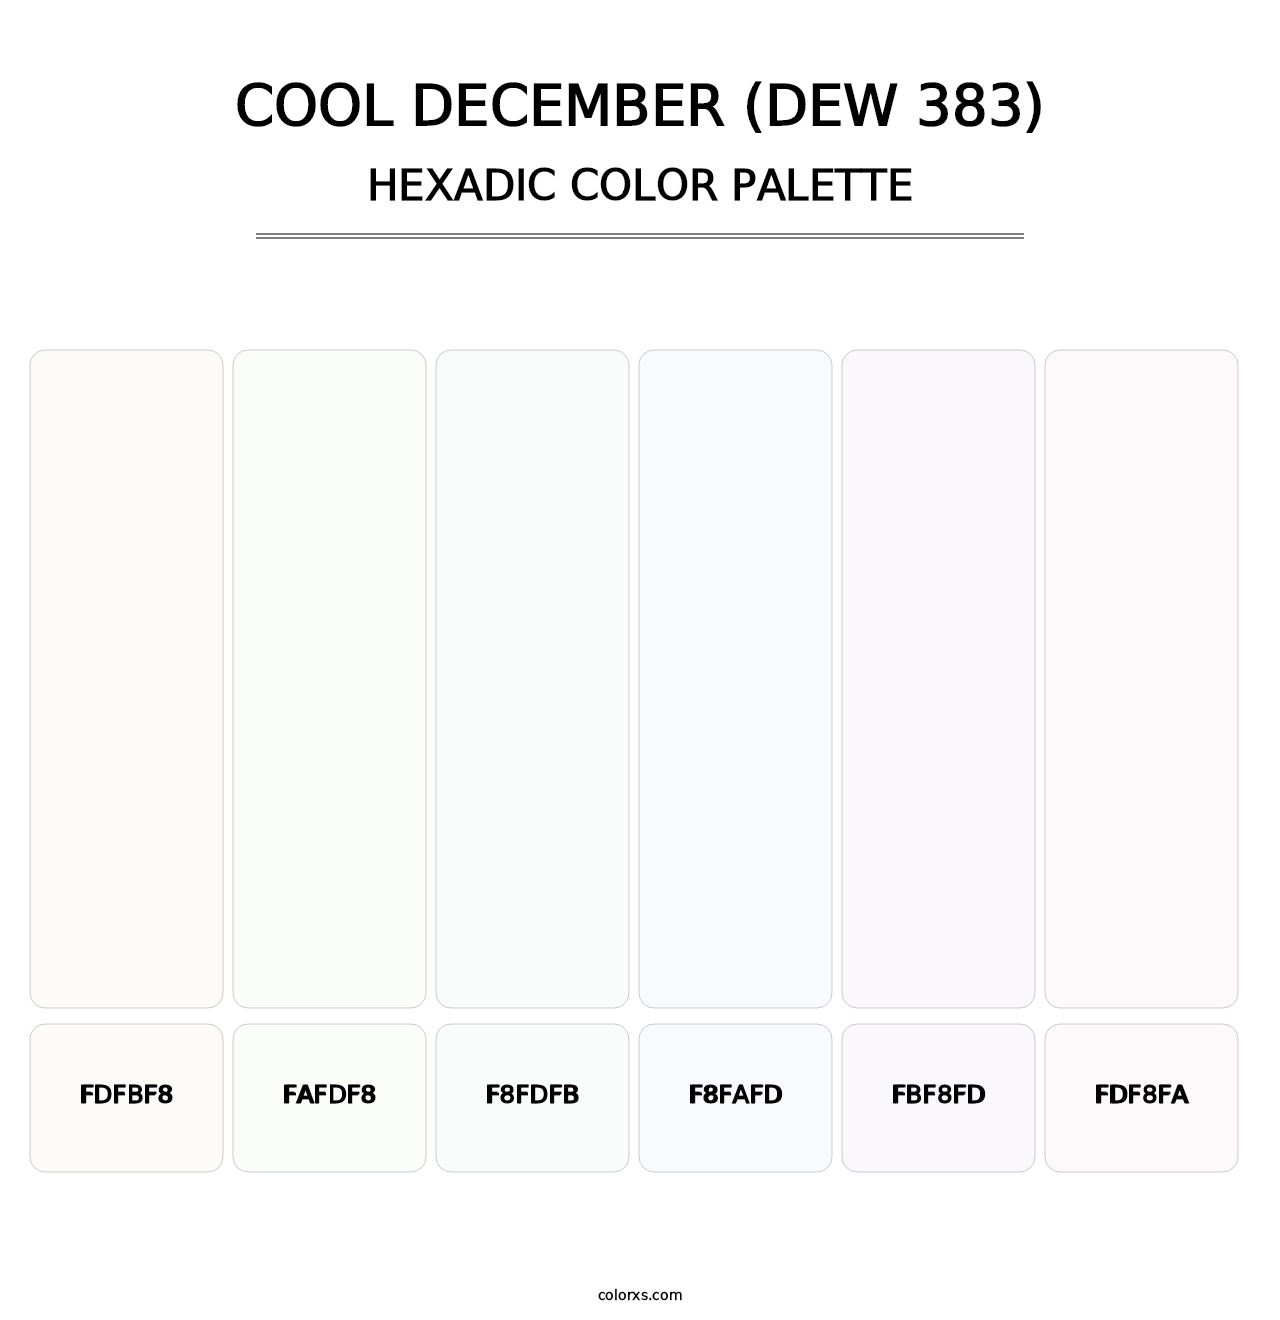 Cool December (DEW 383) - Hexadic Color Palette